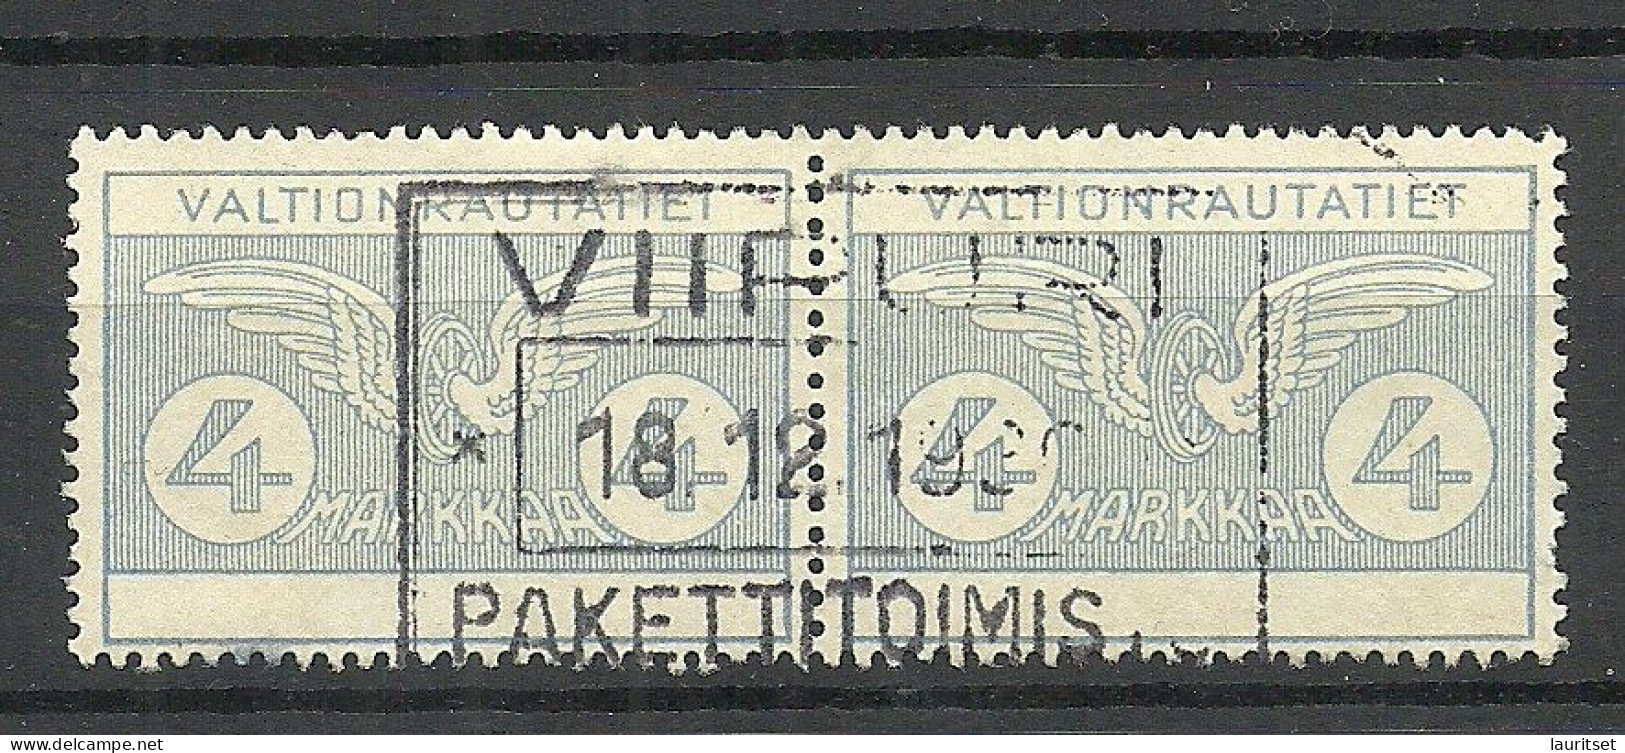 FINLAND FINNLAND 1930ies O Viipuri Railway Stamp 4 MK As Pair - Paquetes Postales